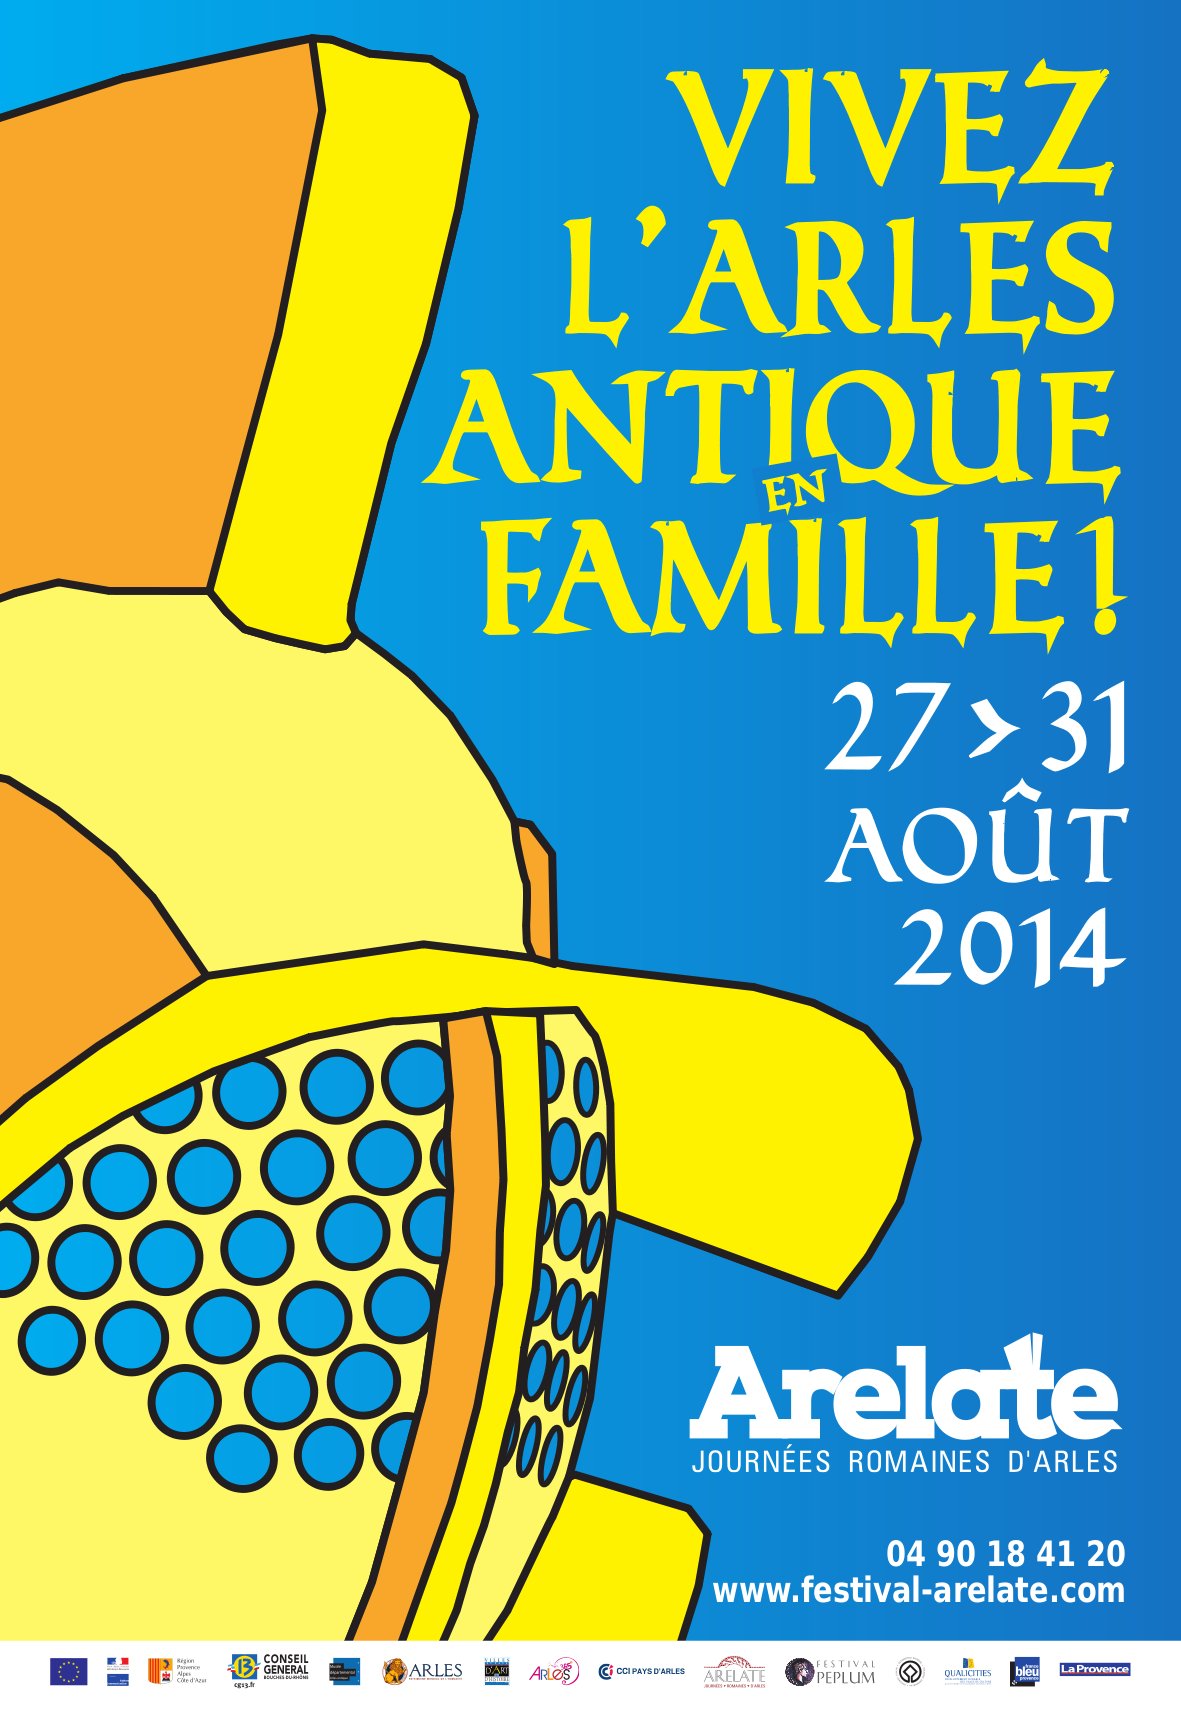 Arelate, journÃ©es romaines d'Arles